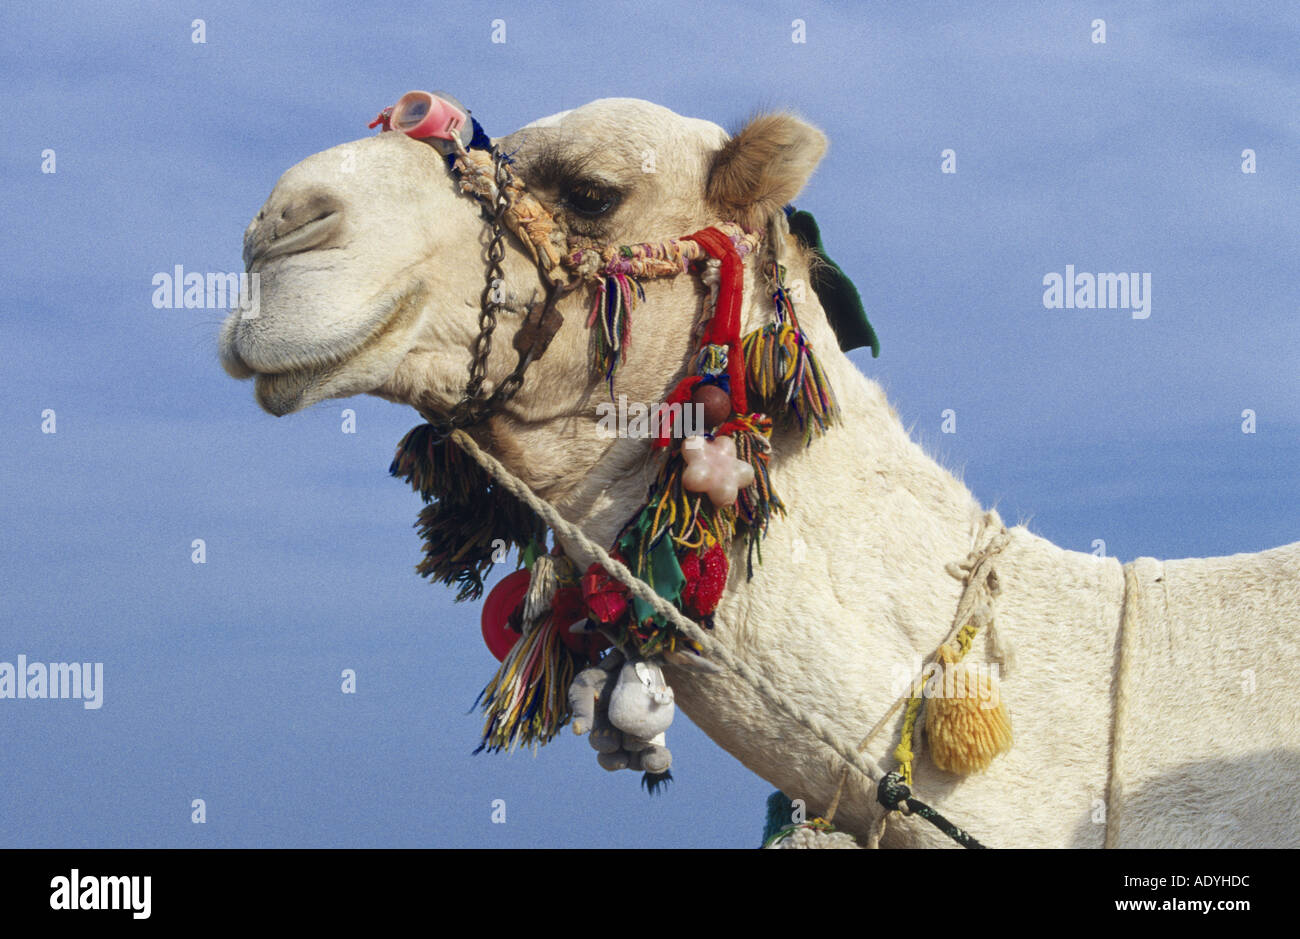 dromedary, one-humped camel (Camelus dromedarius), portrait with ornamentals, Egypt. Stock Photo